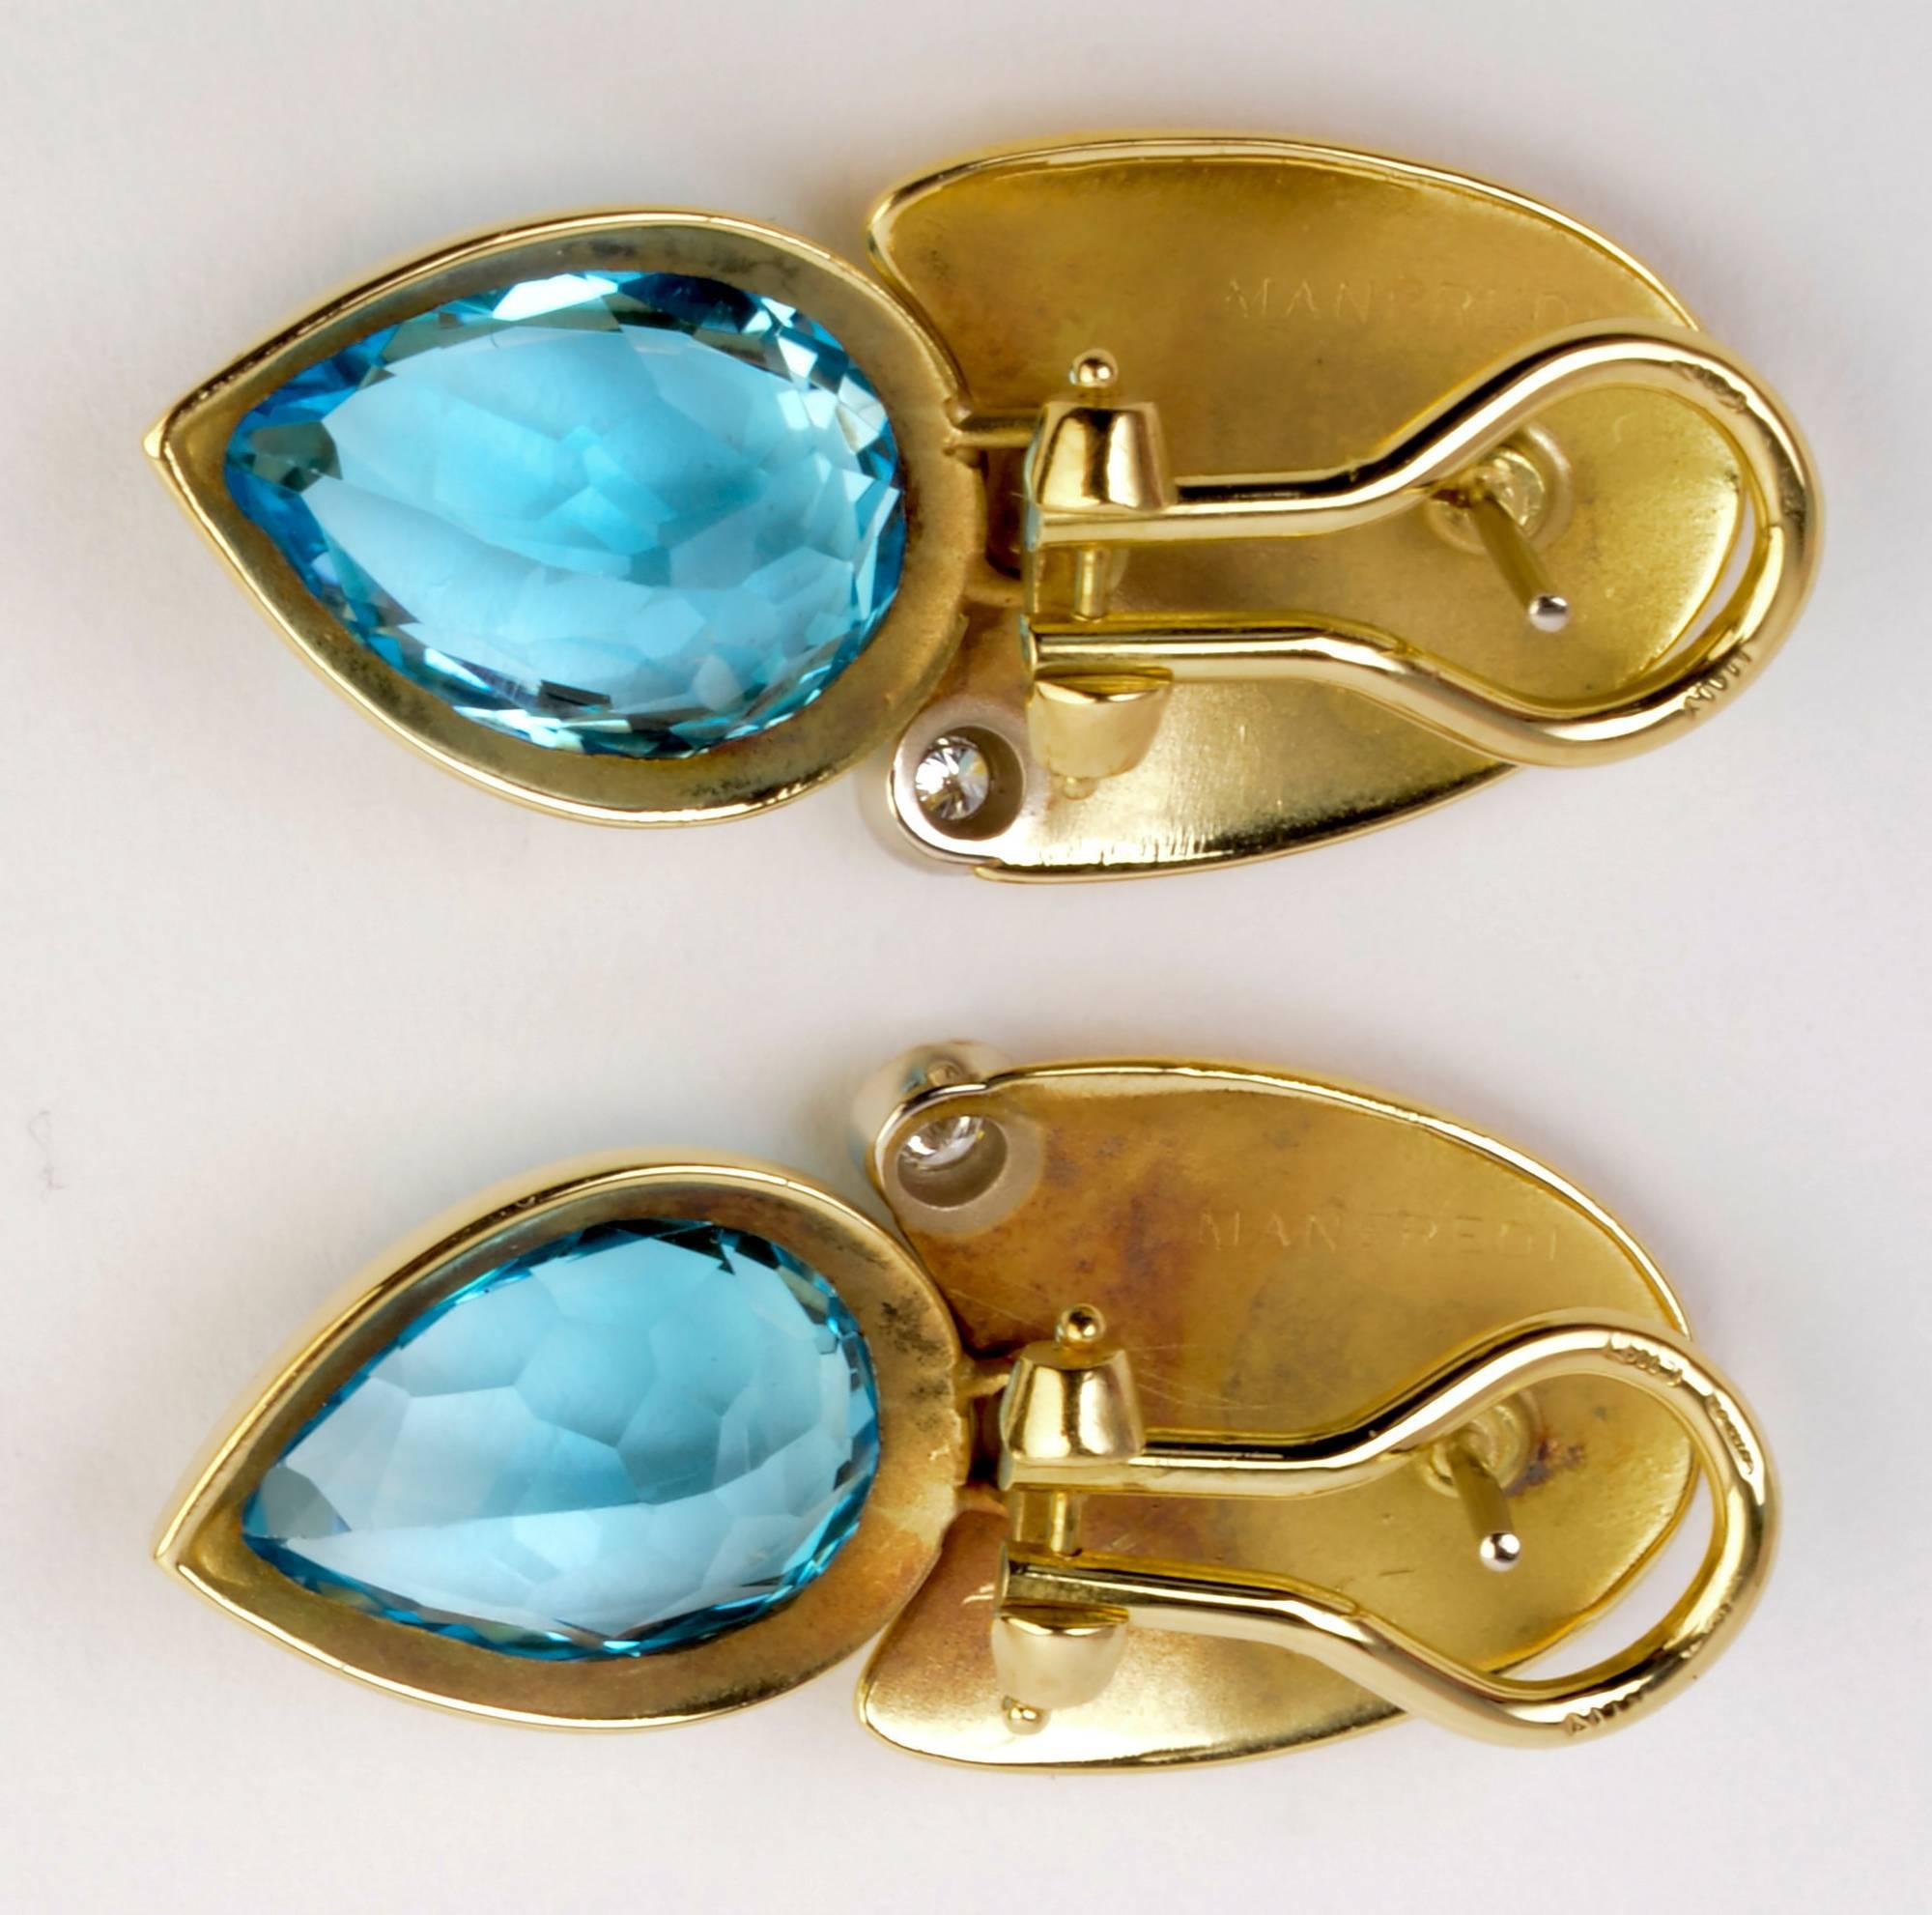 Modern Manfredi Blue Topaz with Diamond Earrings